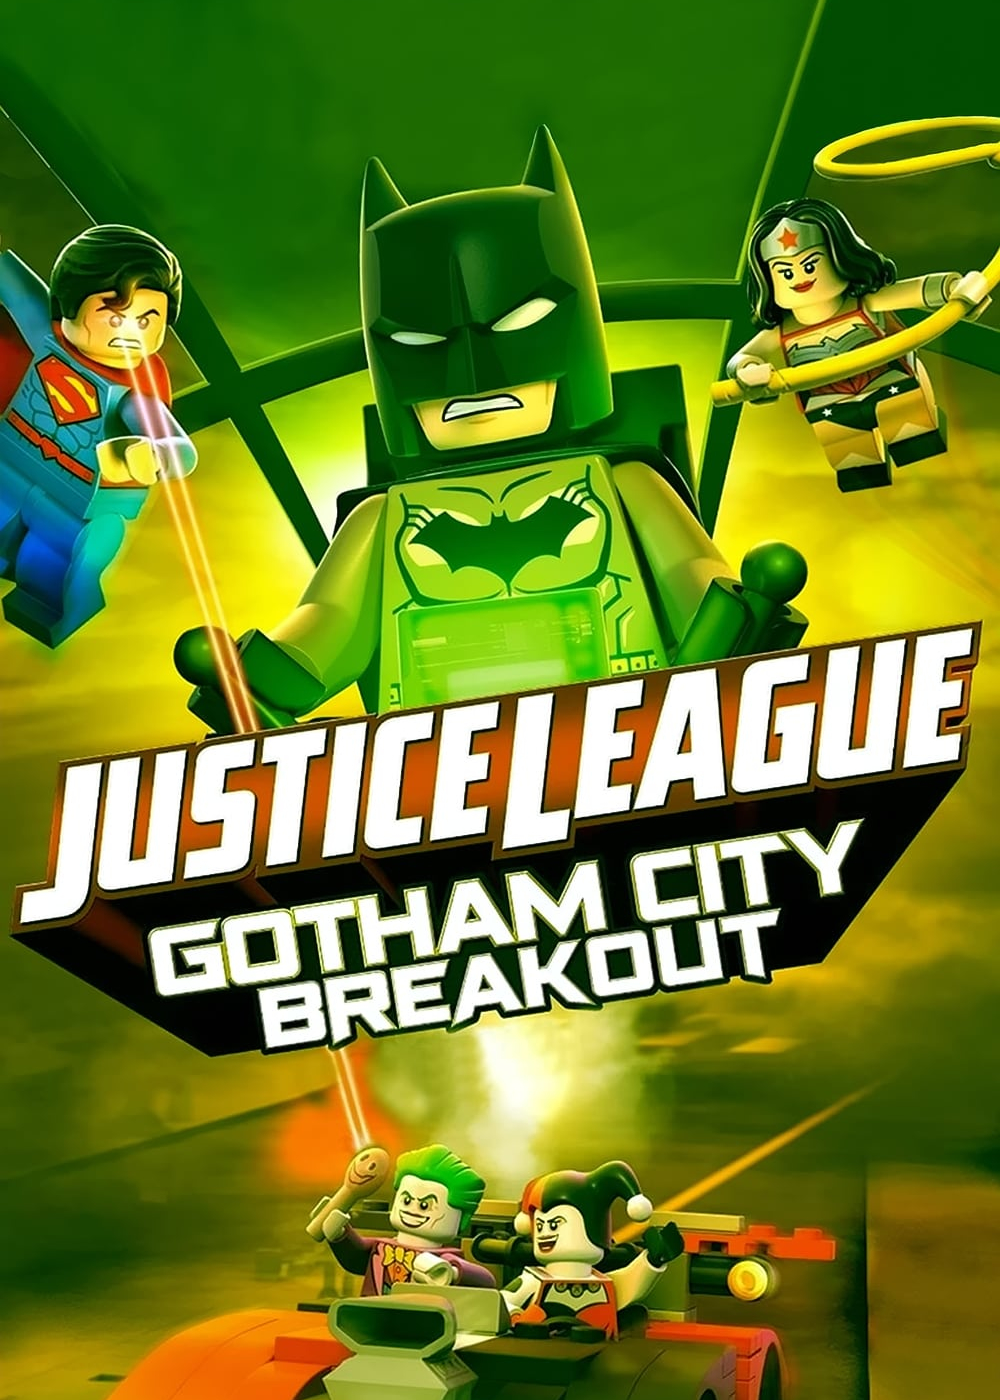 Lego DC Comics Superheroes: Justice League - Gotham City Breakout (Lego DC Comics Superheroes: Justice League - Gotham City Breakout) [2016]